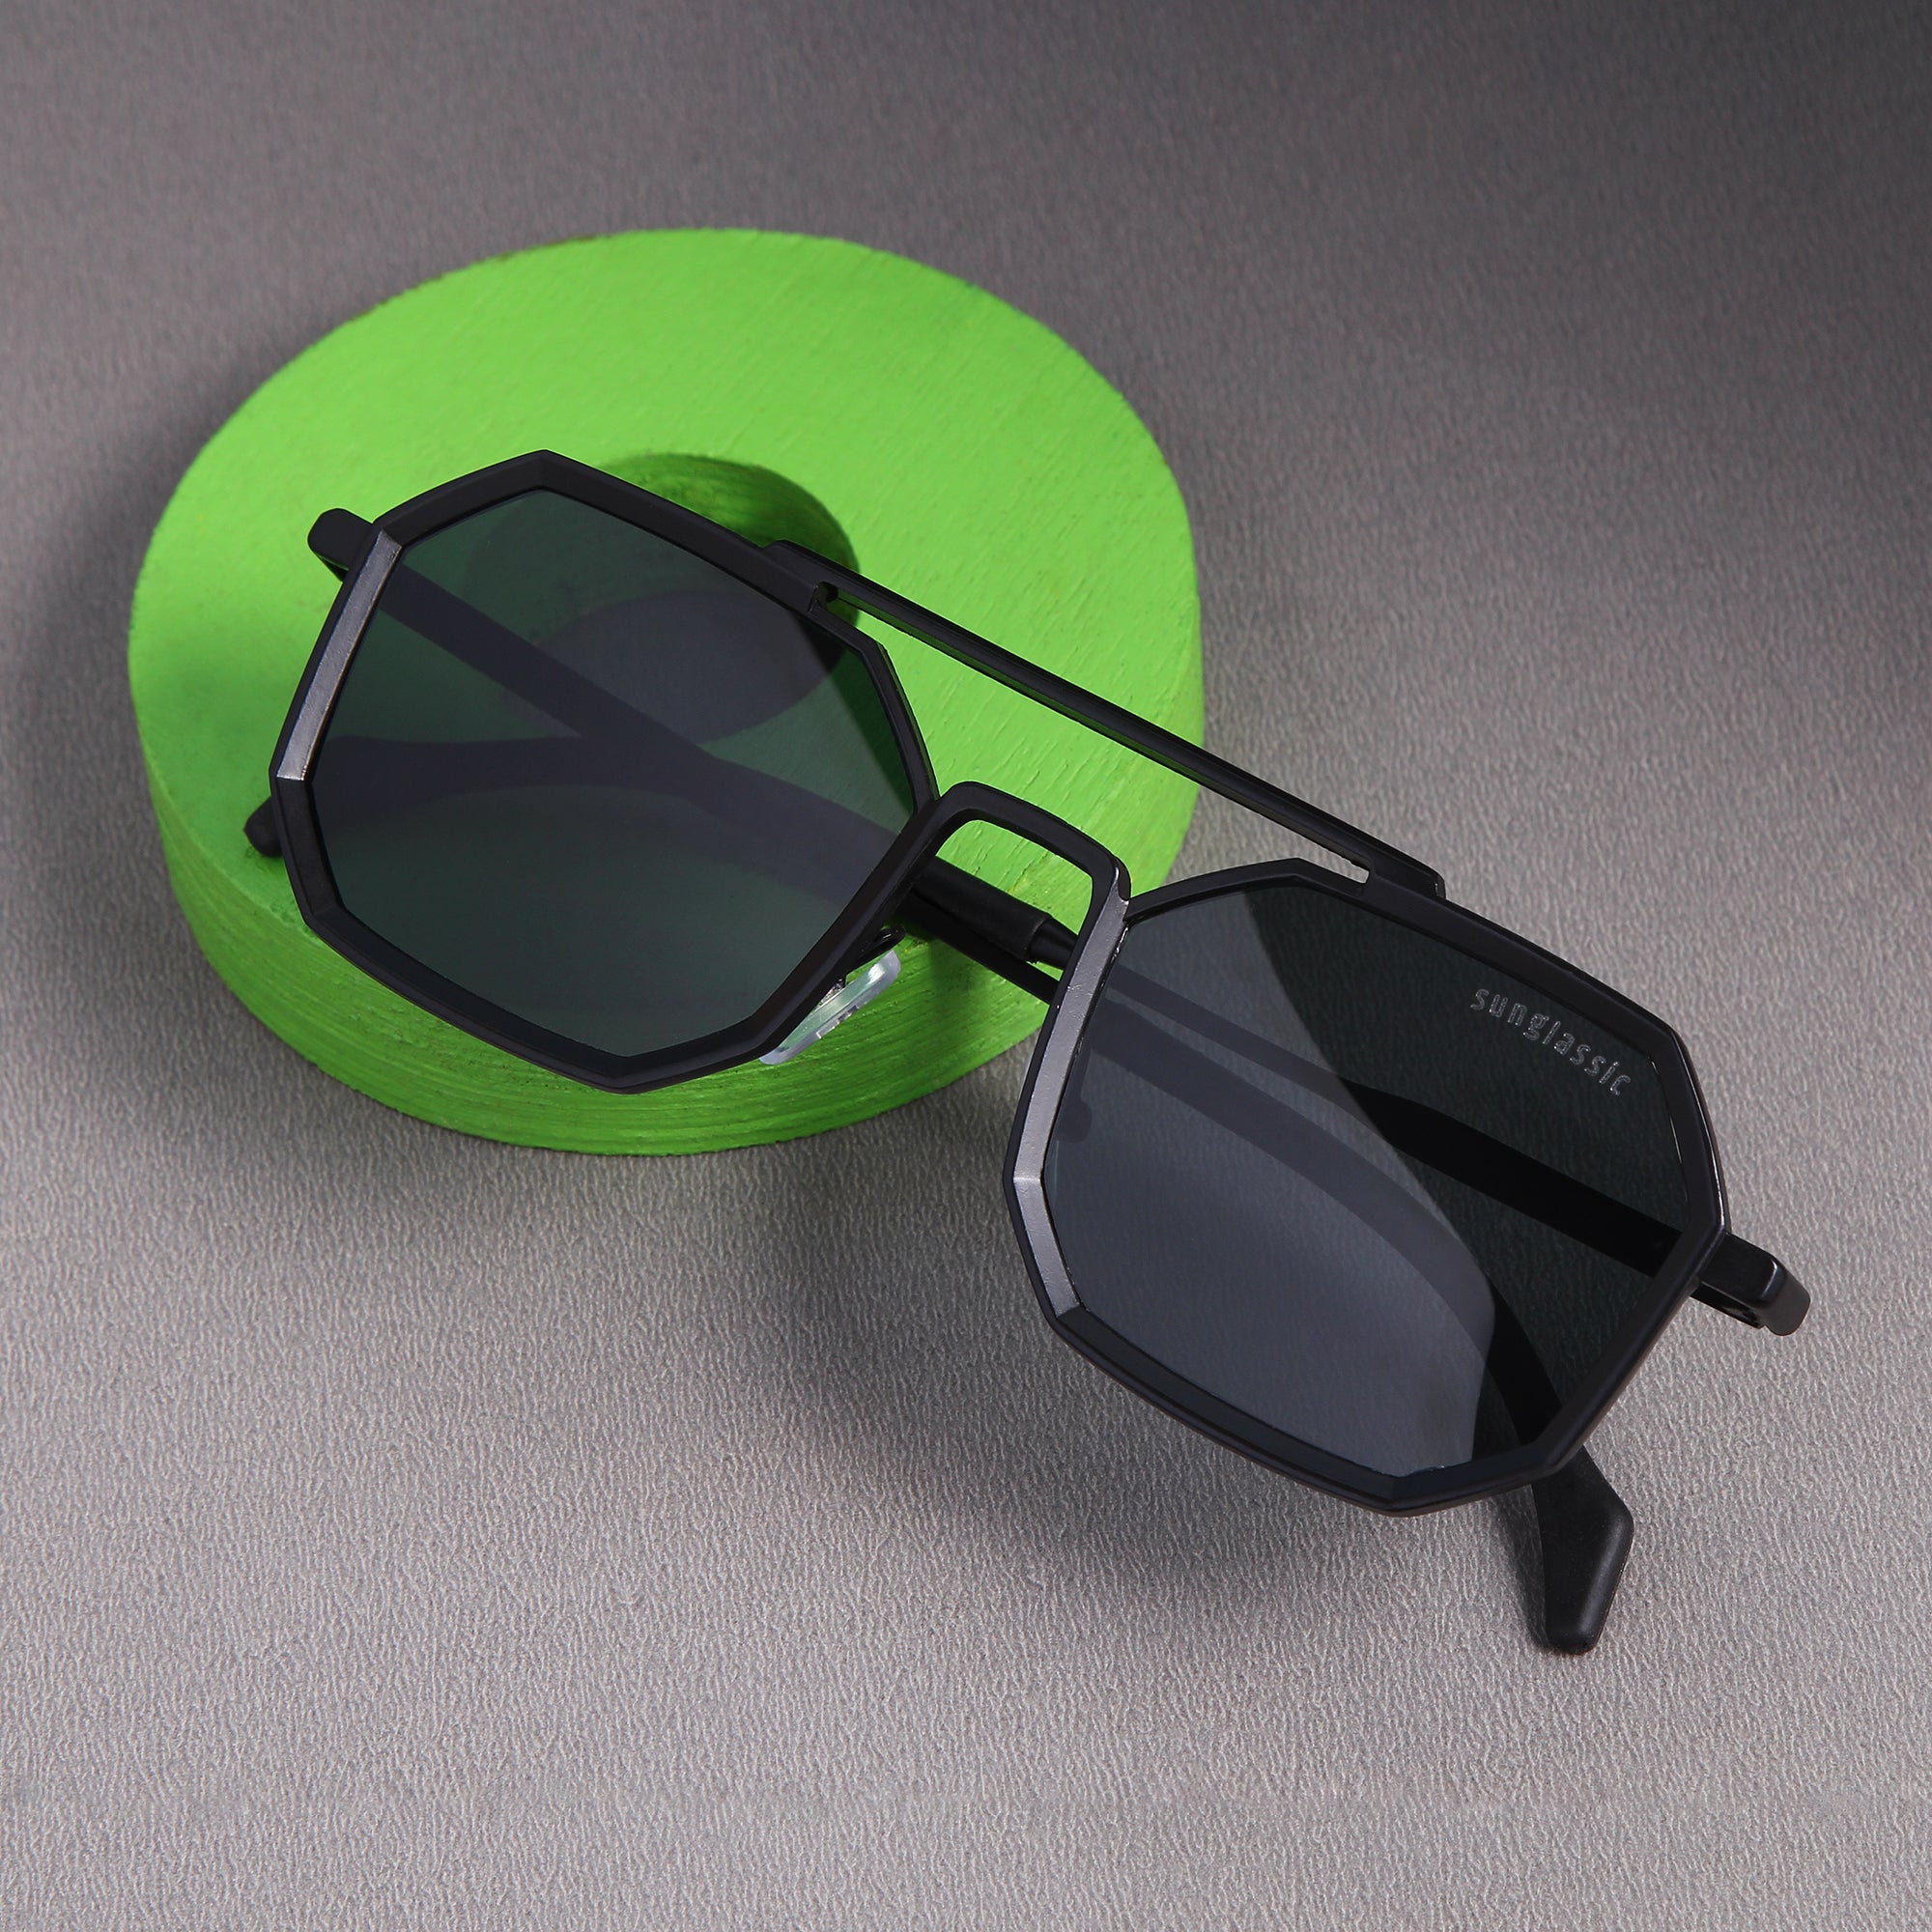 StylStylish black sunglasses with black lenses.ish black sunglasses with black lenses.